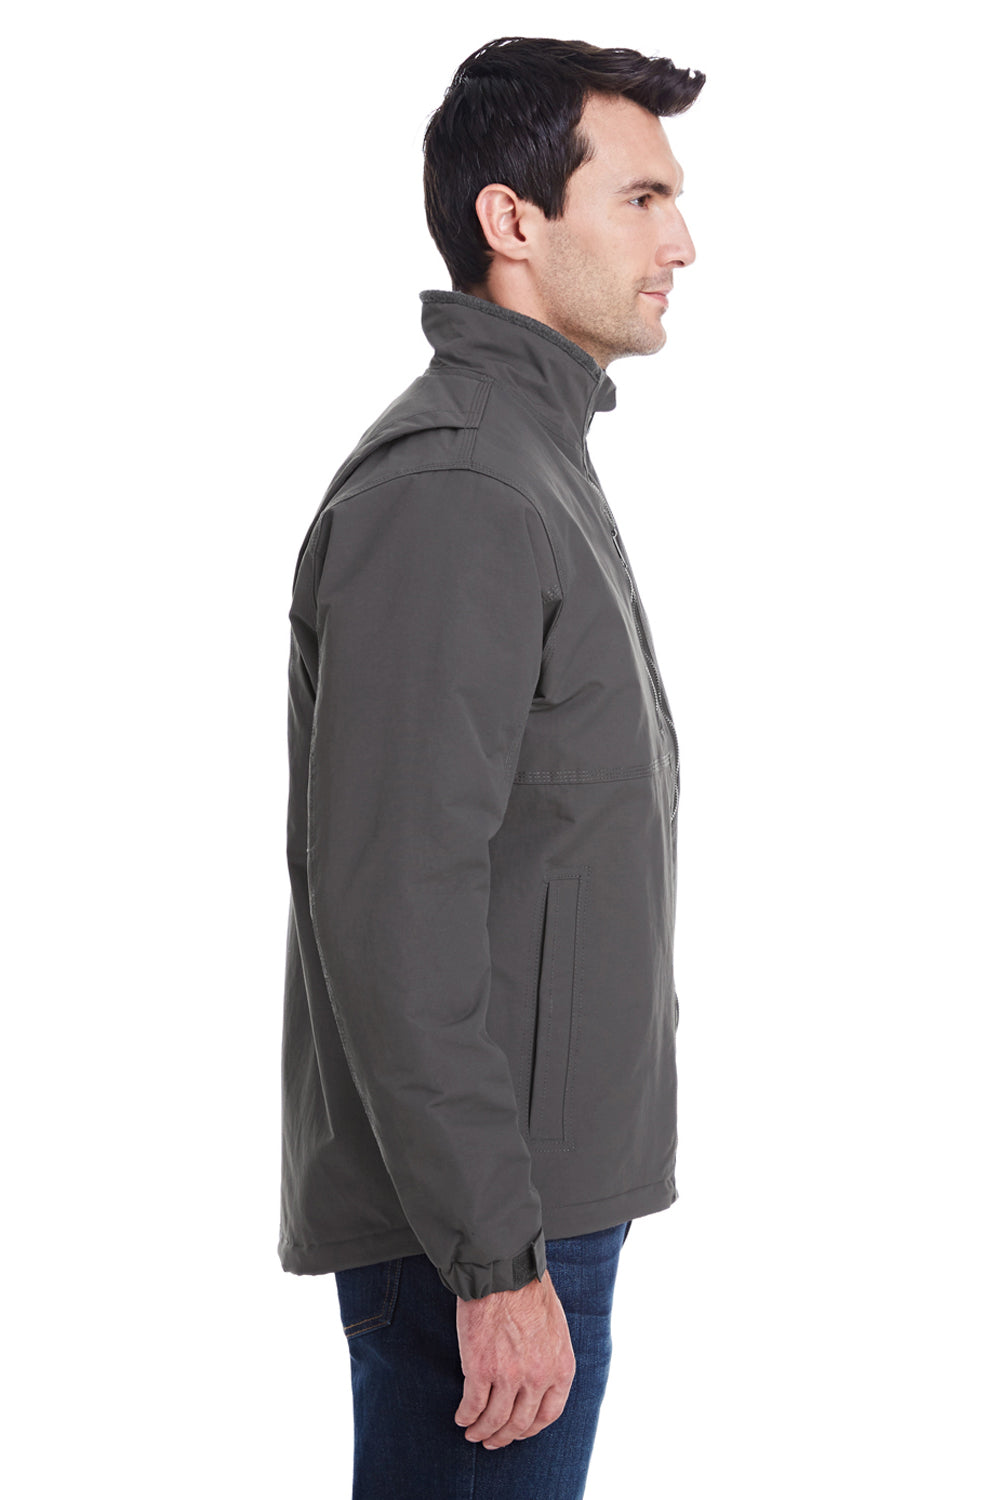 Dri Duck 5369 Mens Navigator Wind & Water Resistant Full Zip Jacket Charcoal Grey Side